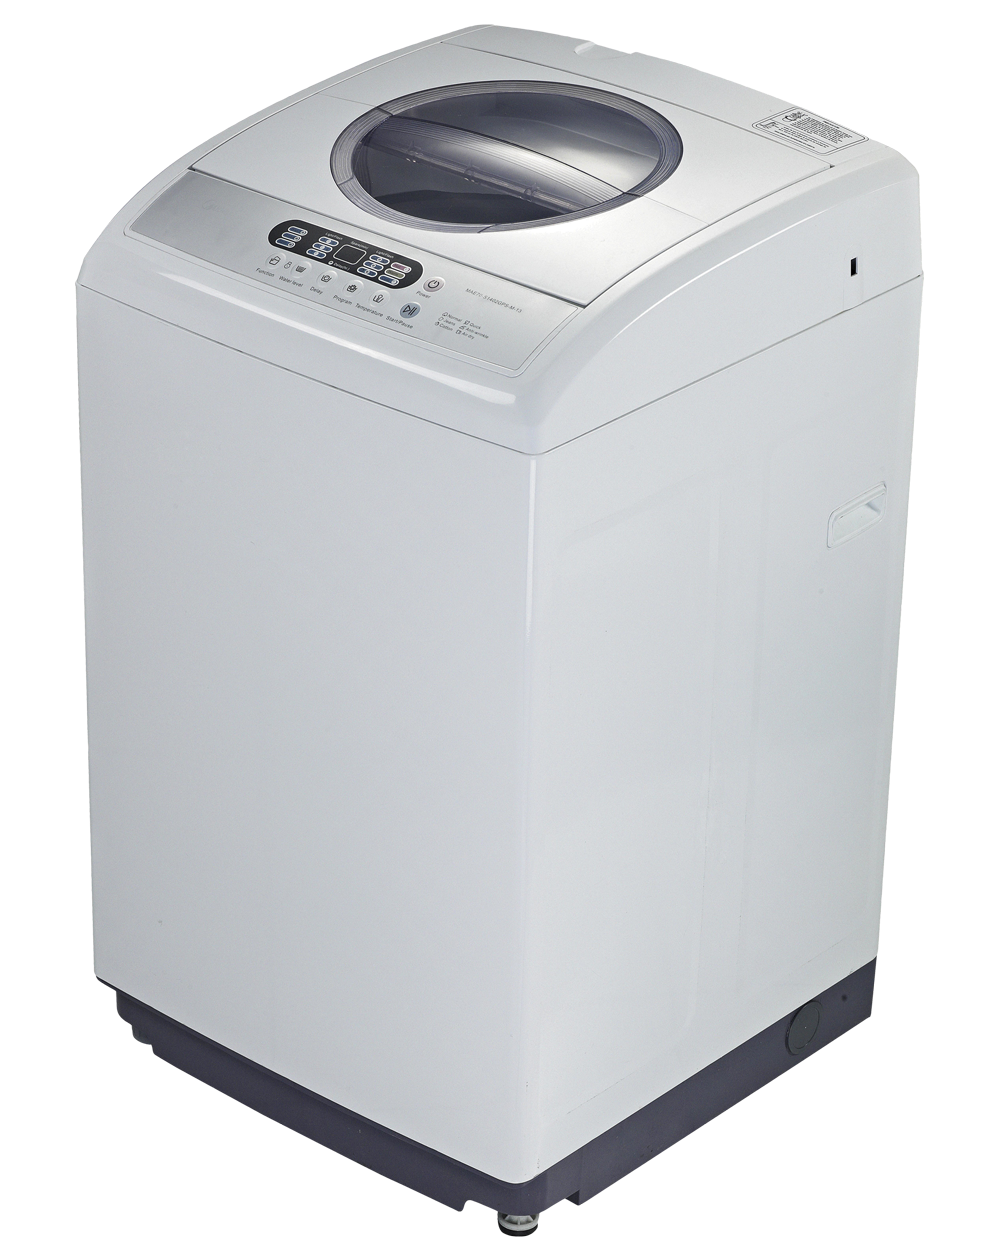 Washing Machine PNG Background Image